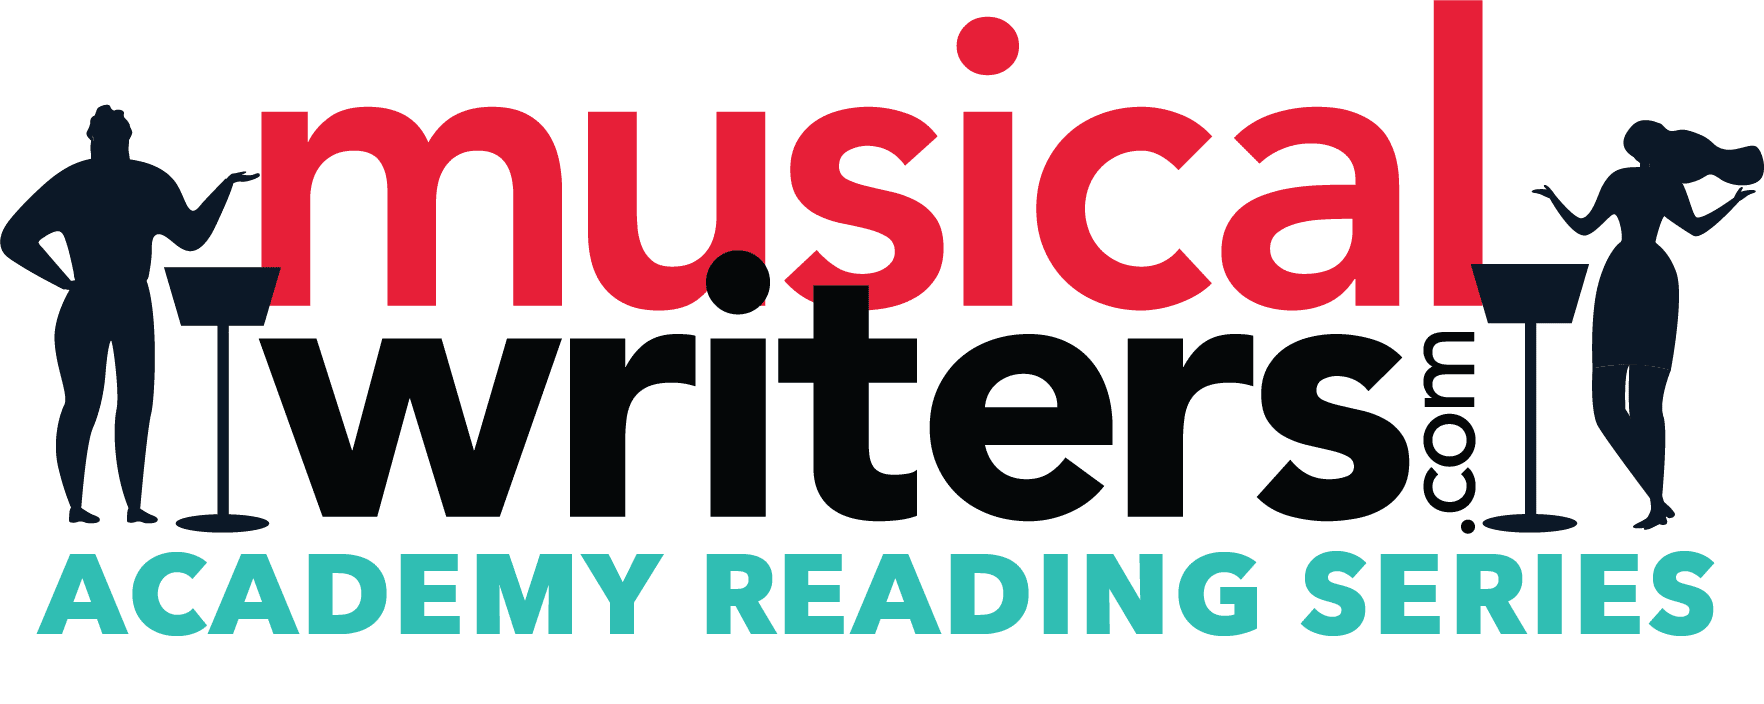 MW Academy Reading Series Logo